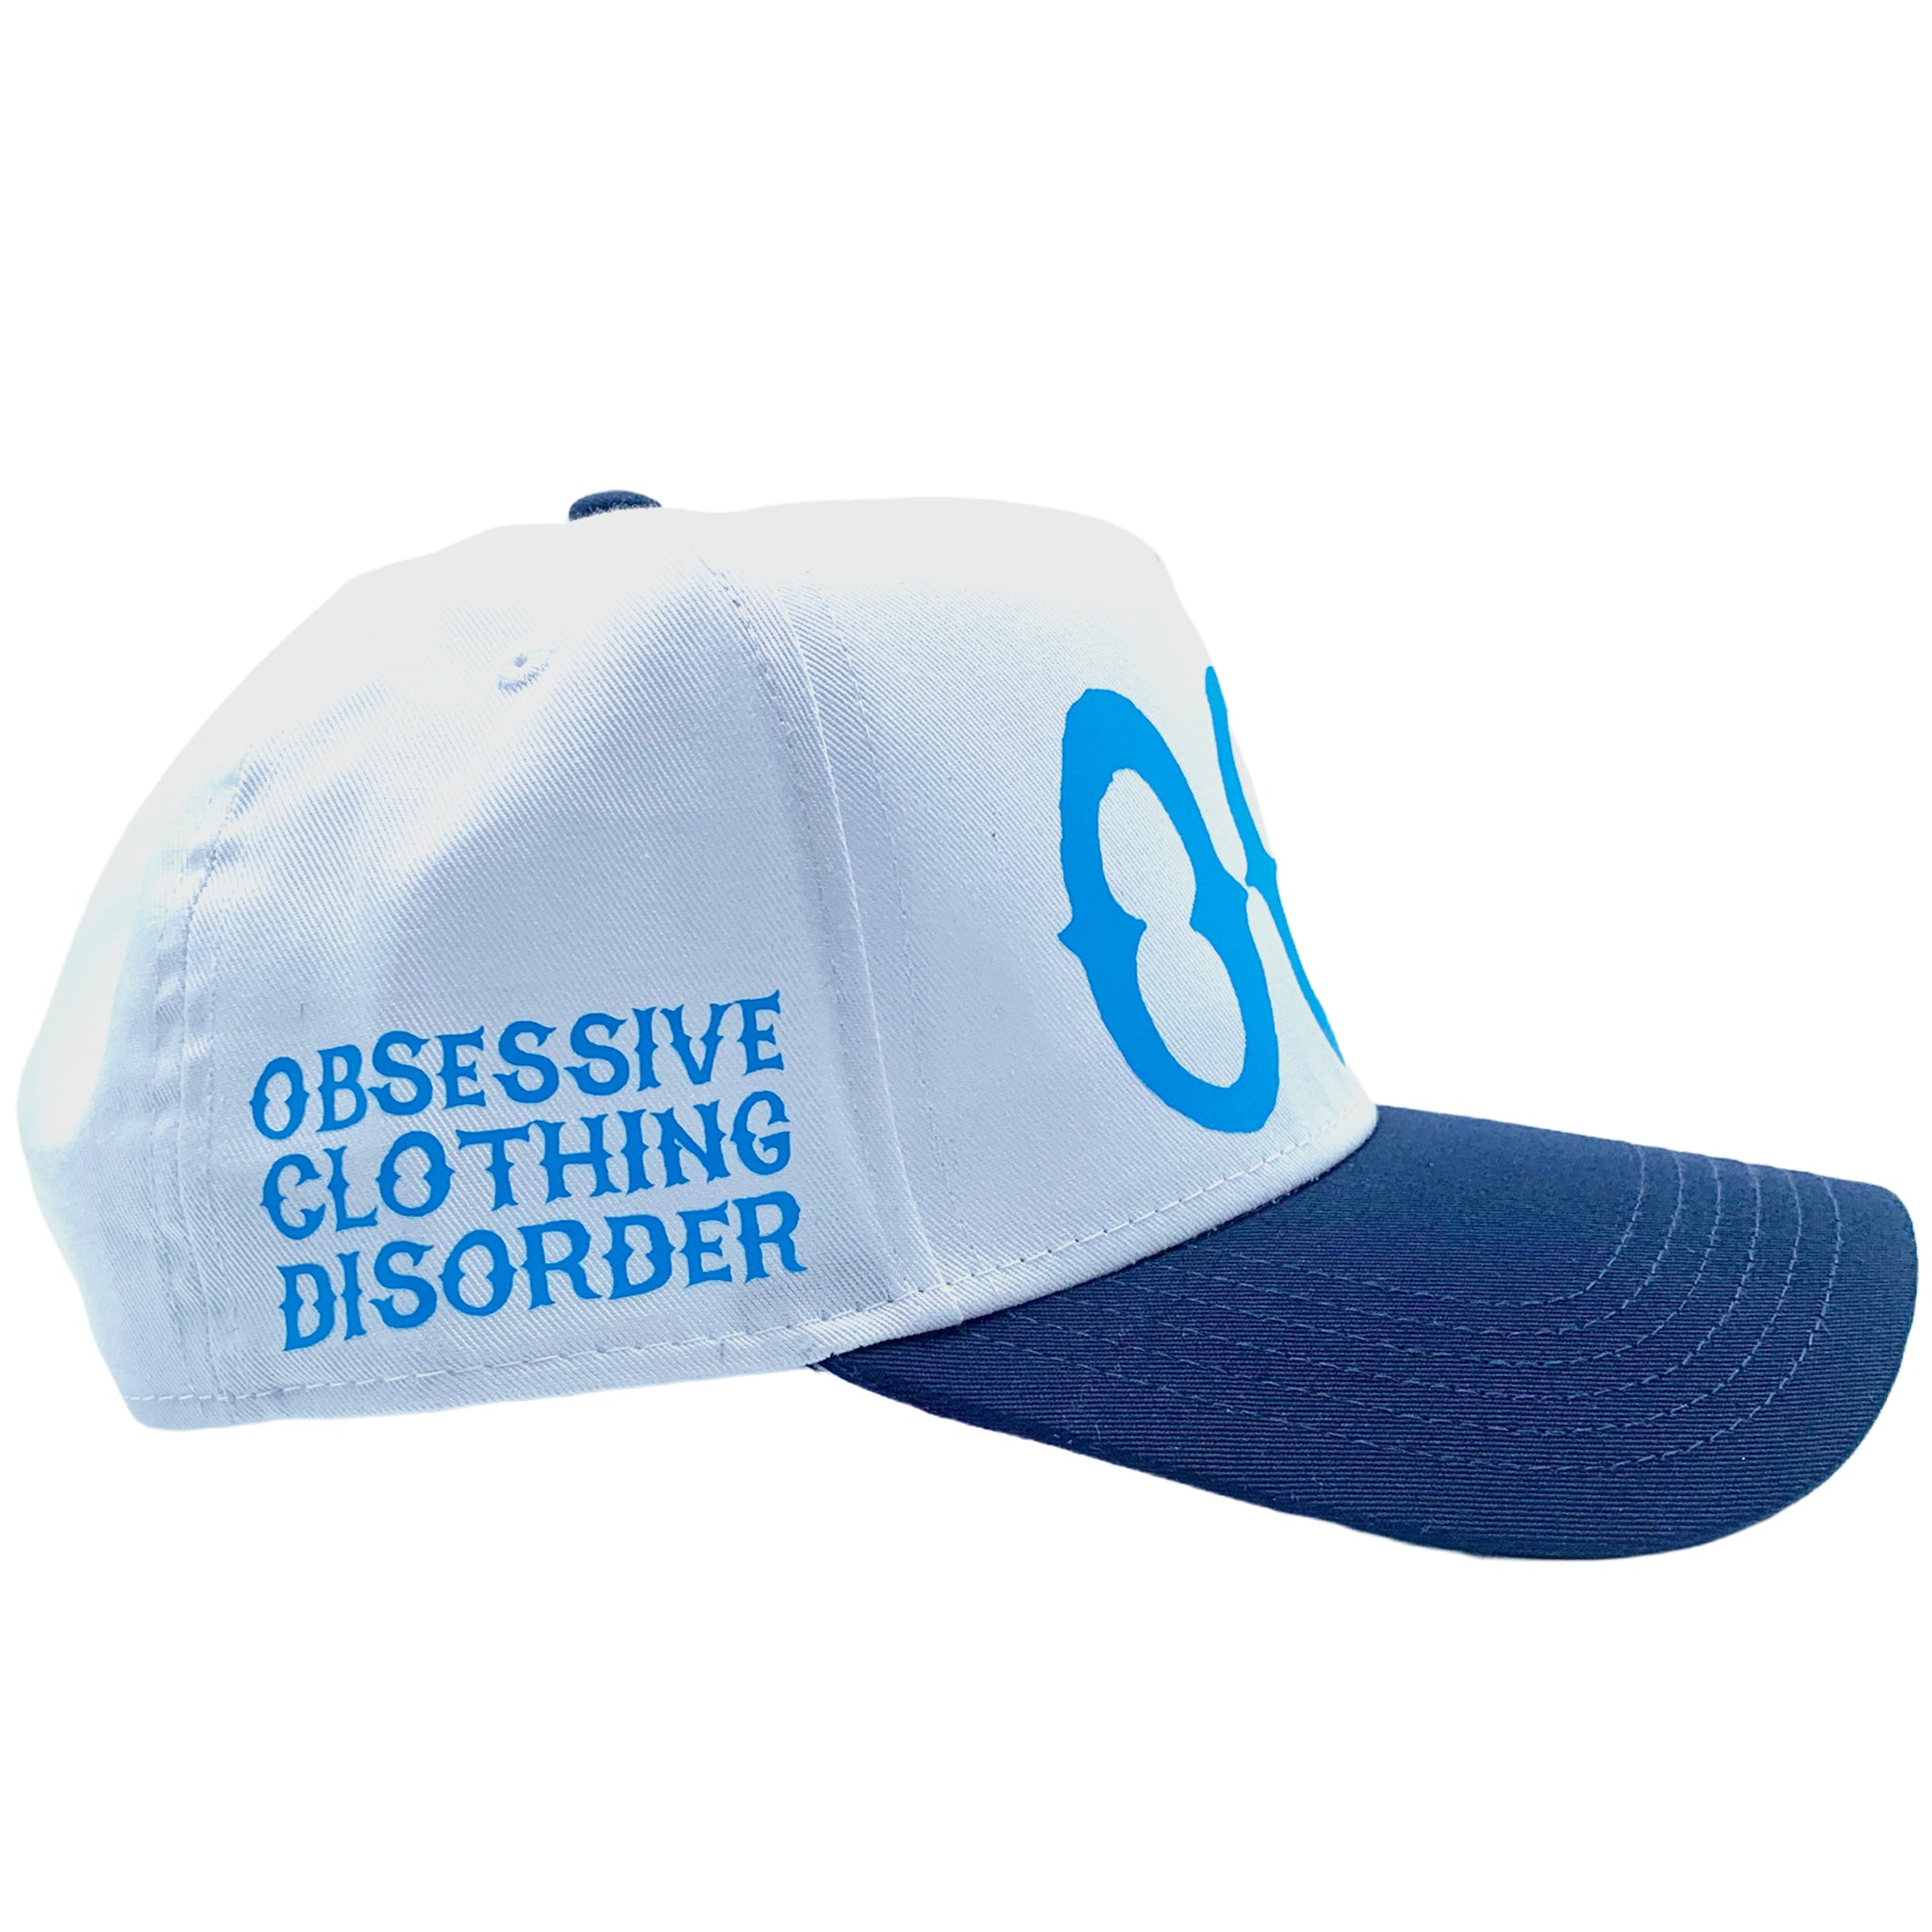 OCD Trucker Hat (Carolina Blue on White/Navy)